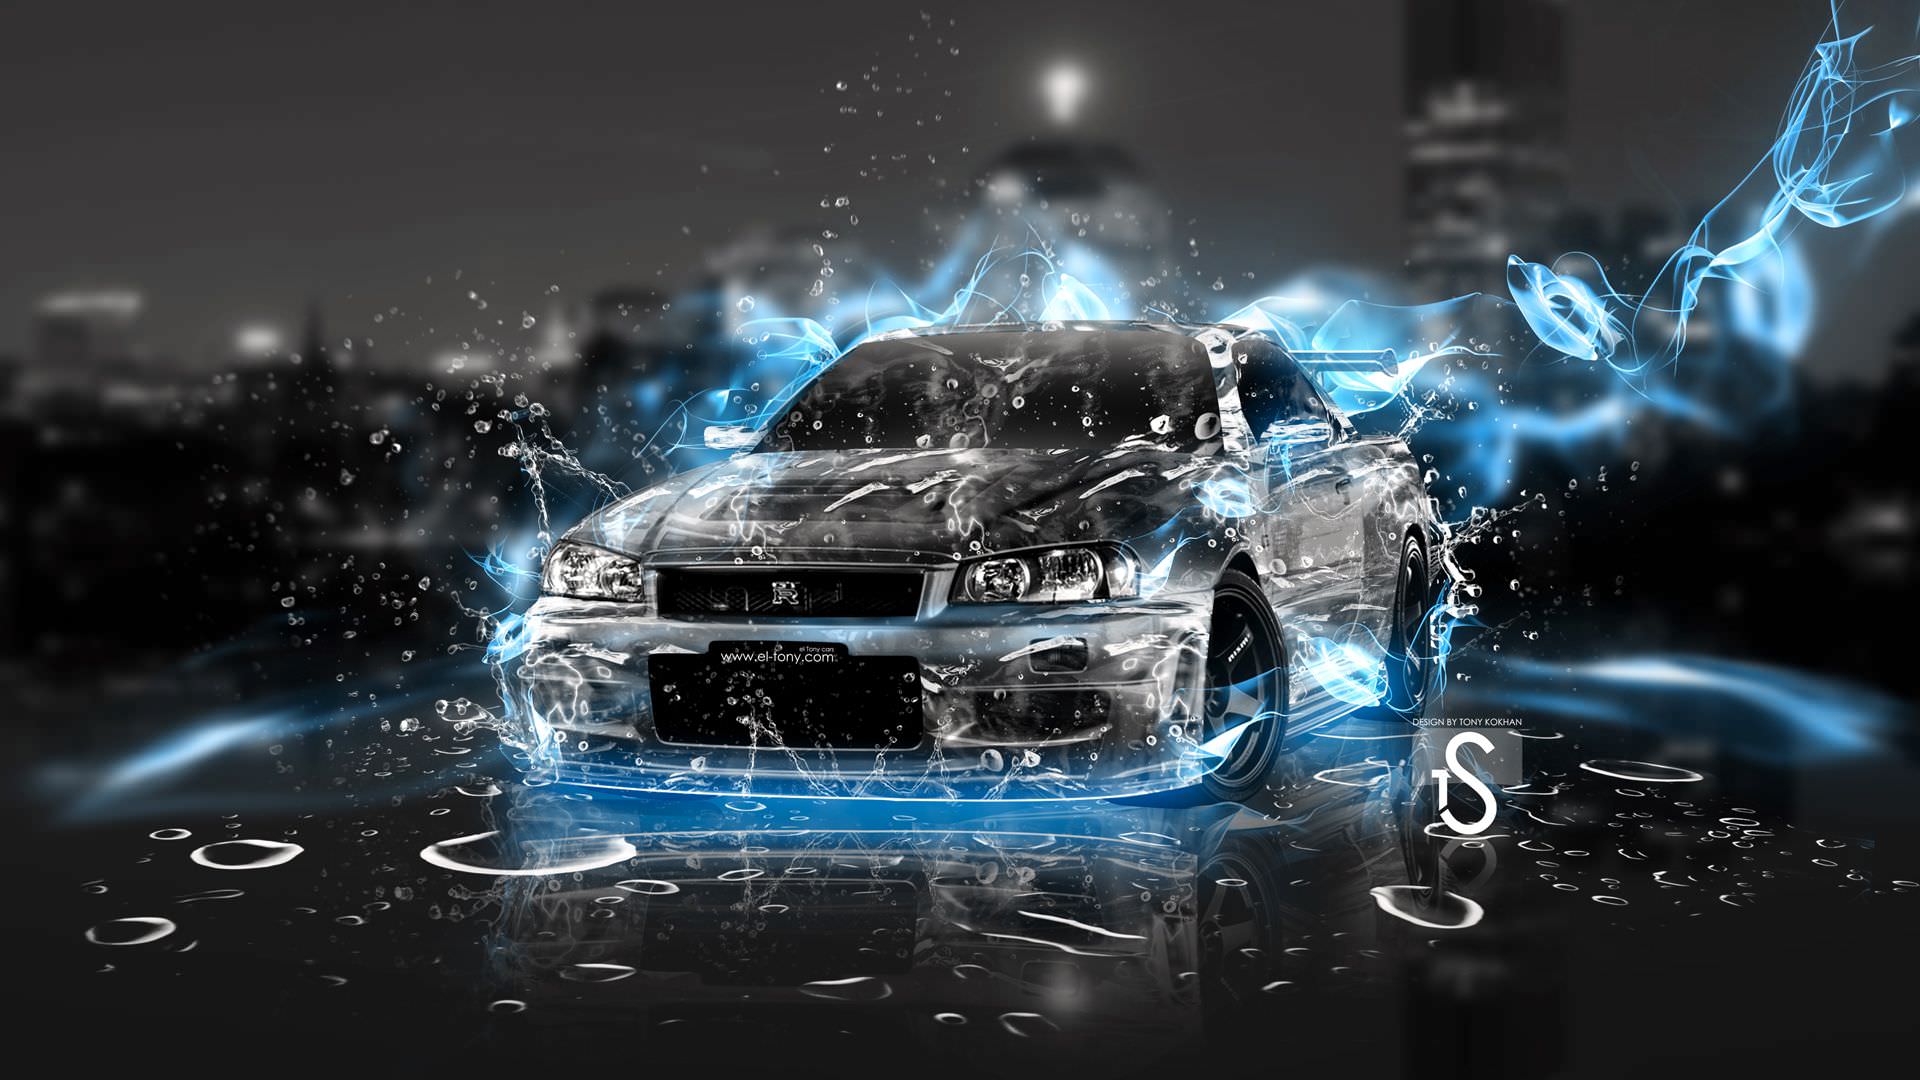 FREE 20+ HD Car Desktop Wallpapers in PSD | Vector EPS